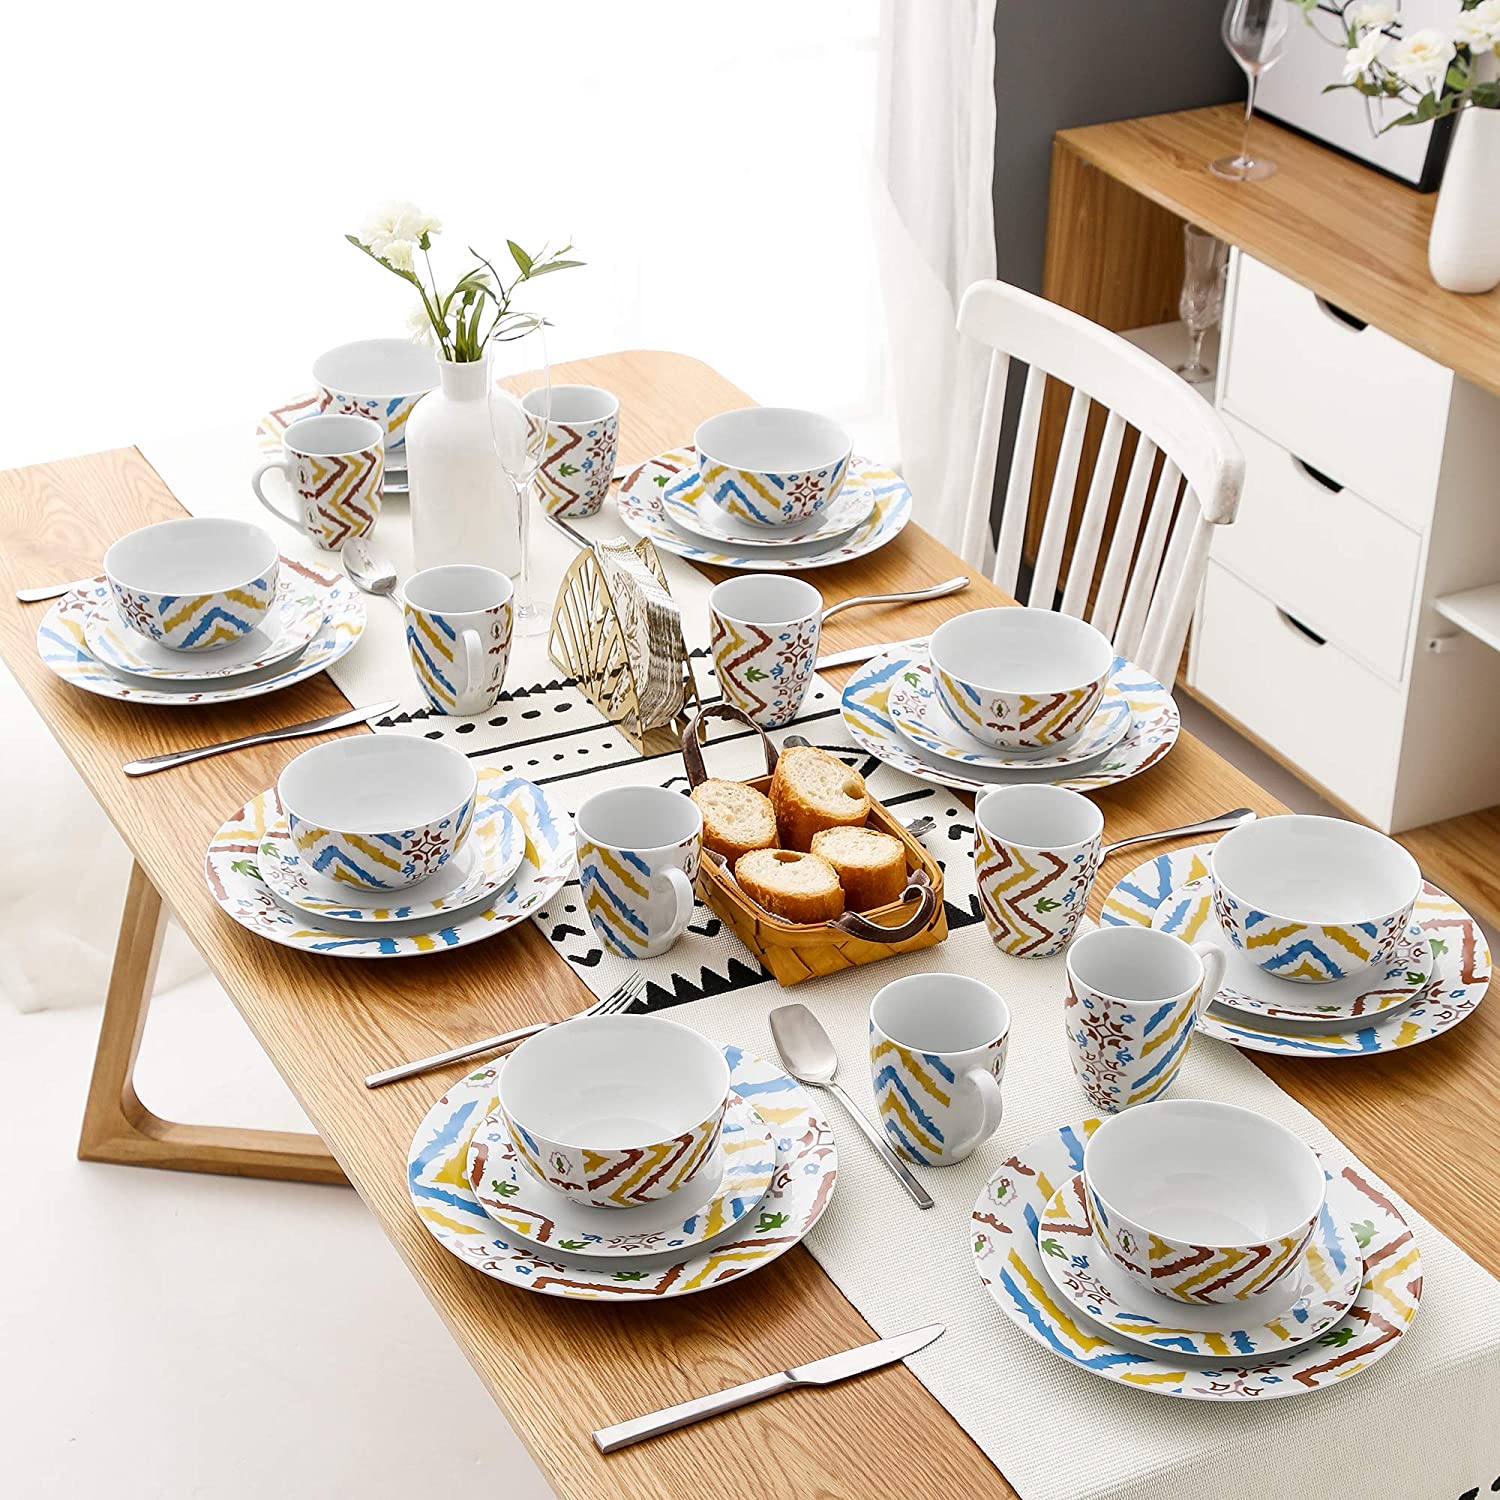 Wholesale ceramic dinnerware set homeware products decal porcelain dinner set